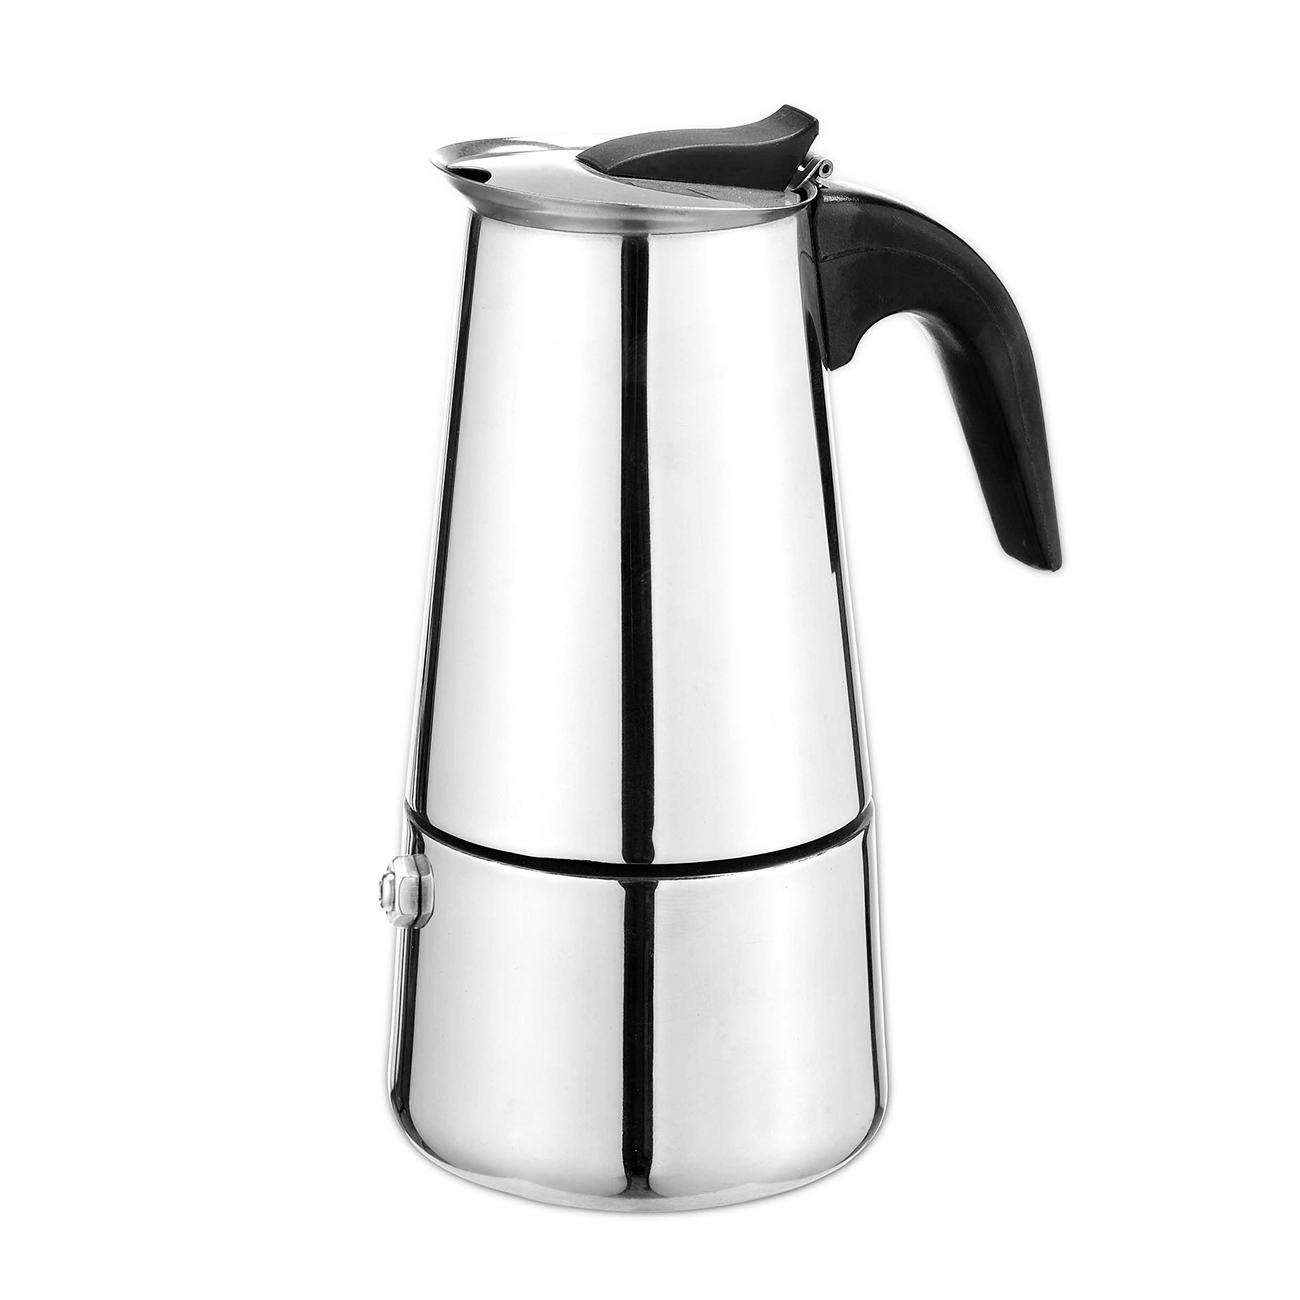 Кафеварка от стомана SAPIR SP 1173 B6, 6 чаши, Инокс